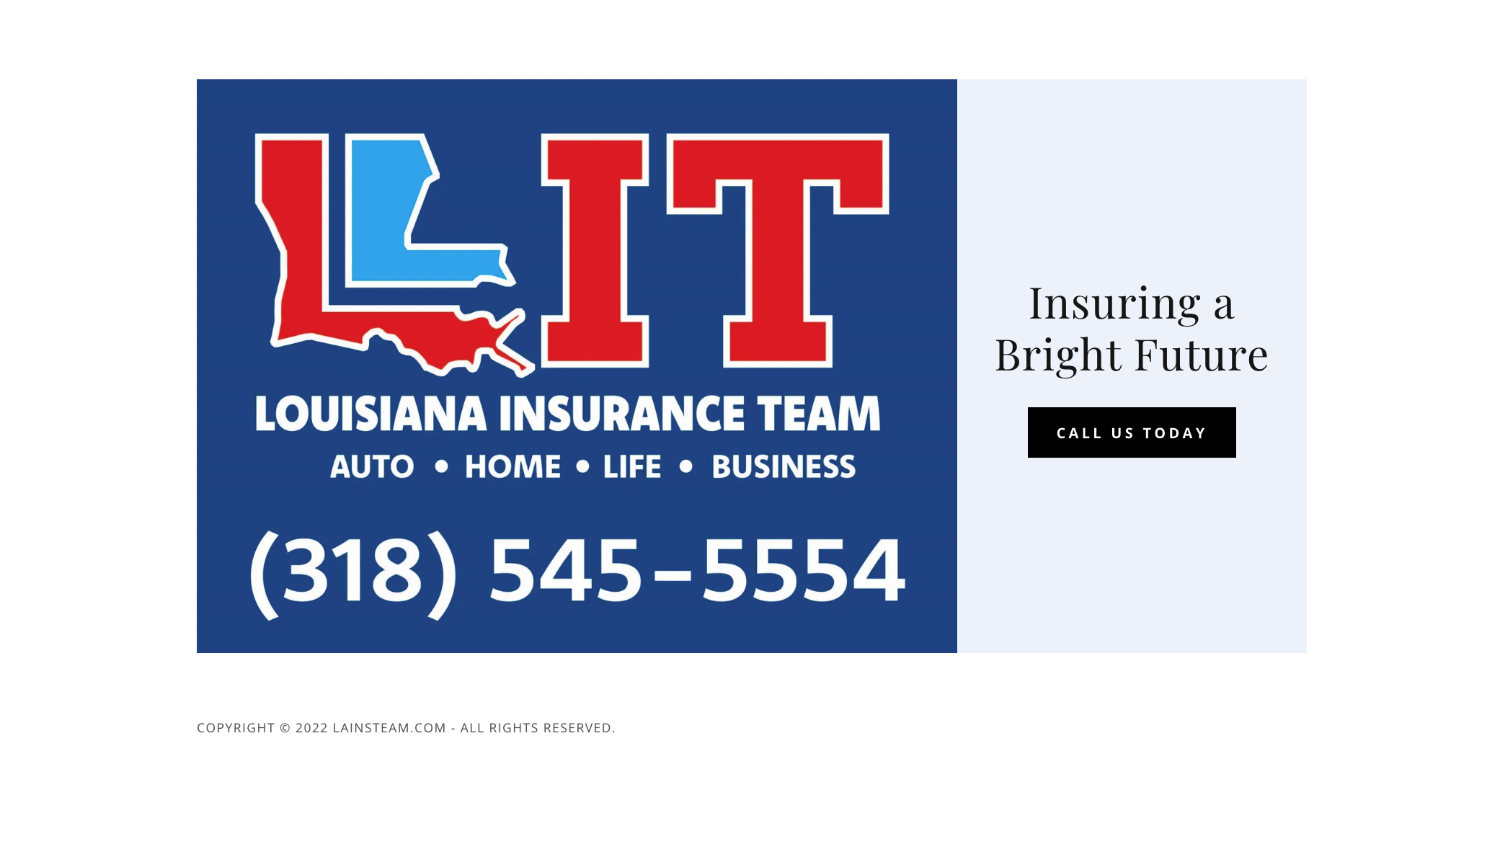 Louisiana Insurance Team. Auto, home, life, business insurance. Call us at 318-545-5554